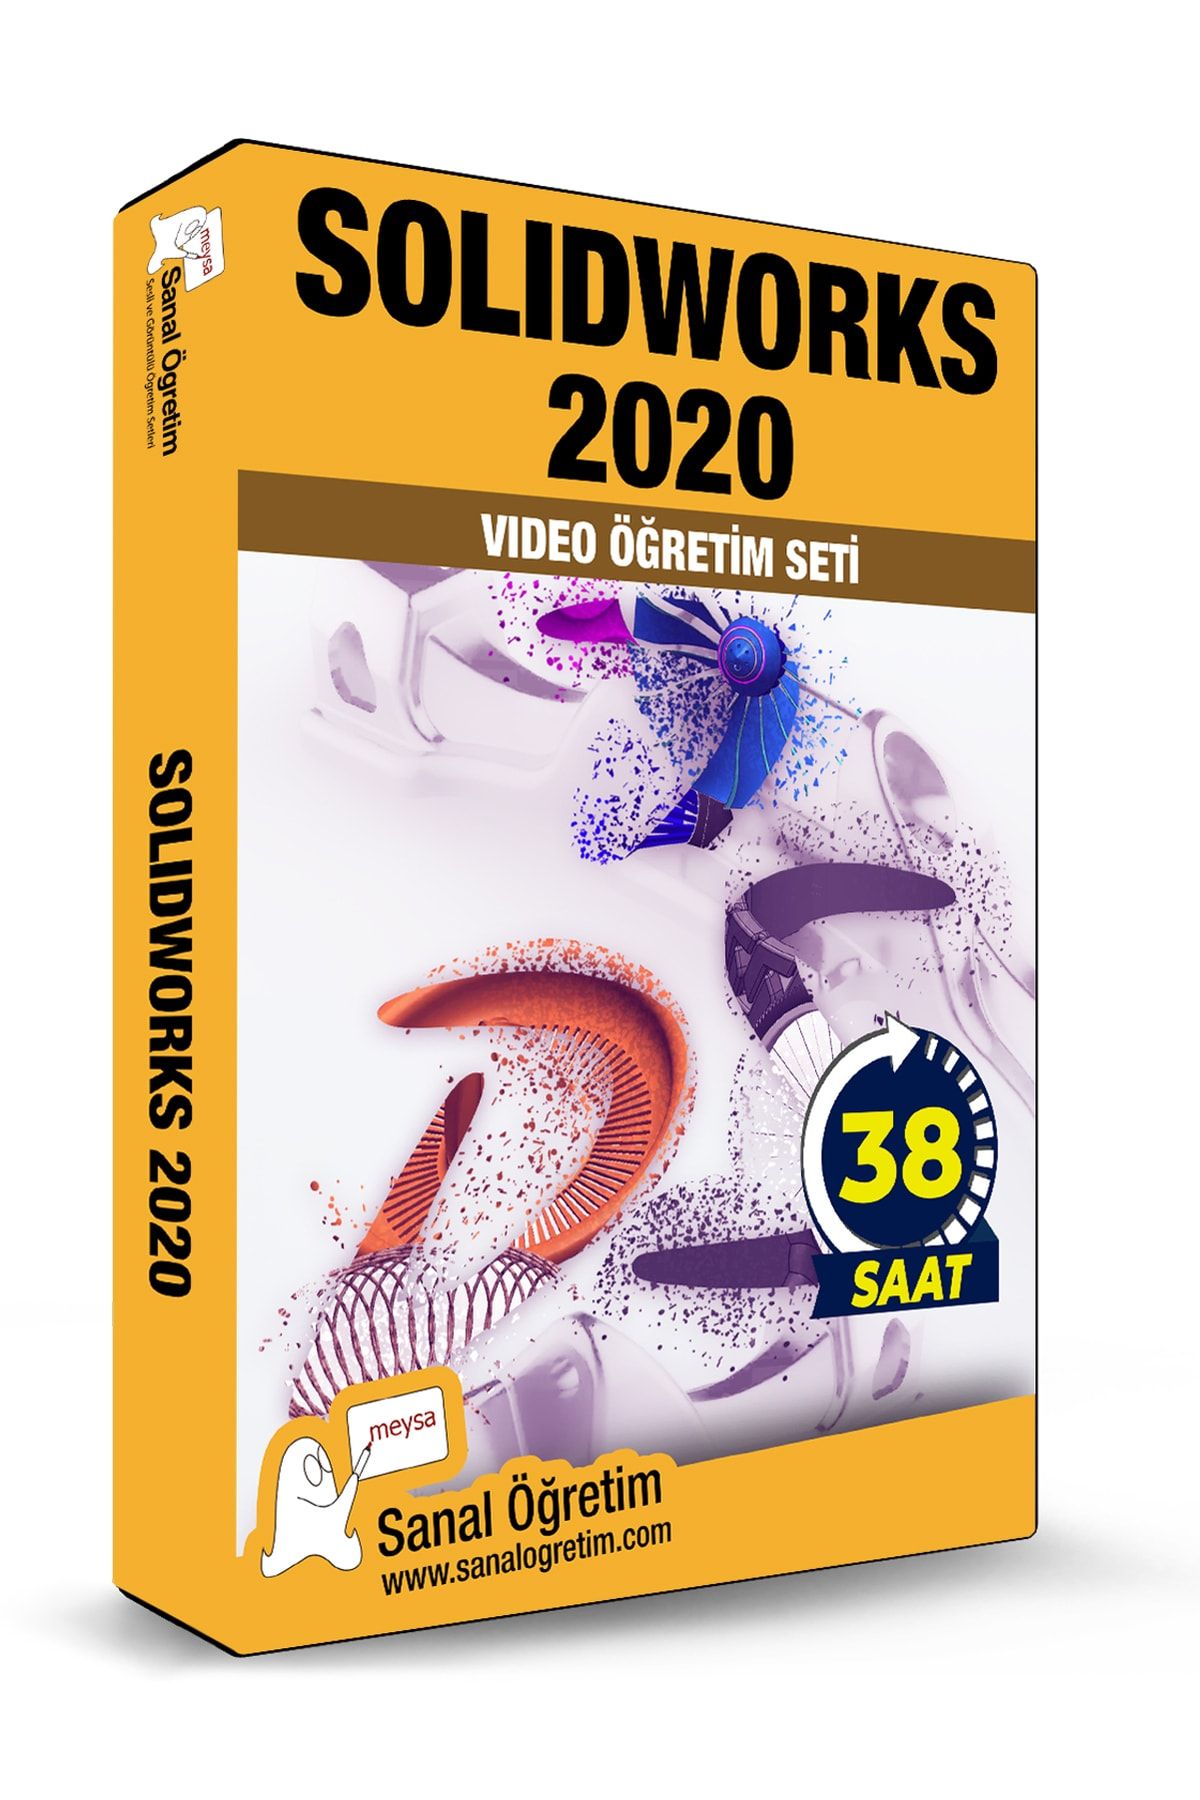 Sanal Öğretim Solidworks 2020 Video Ders Eğitim Seti